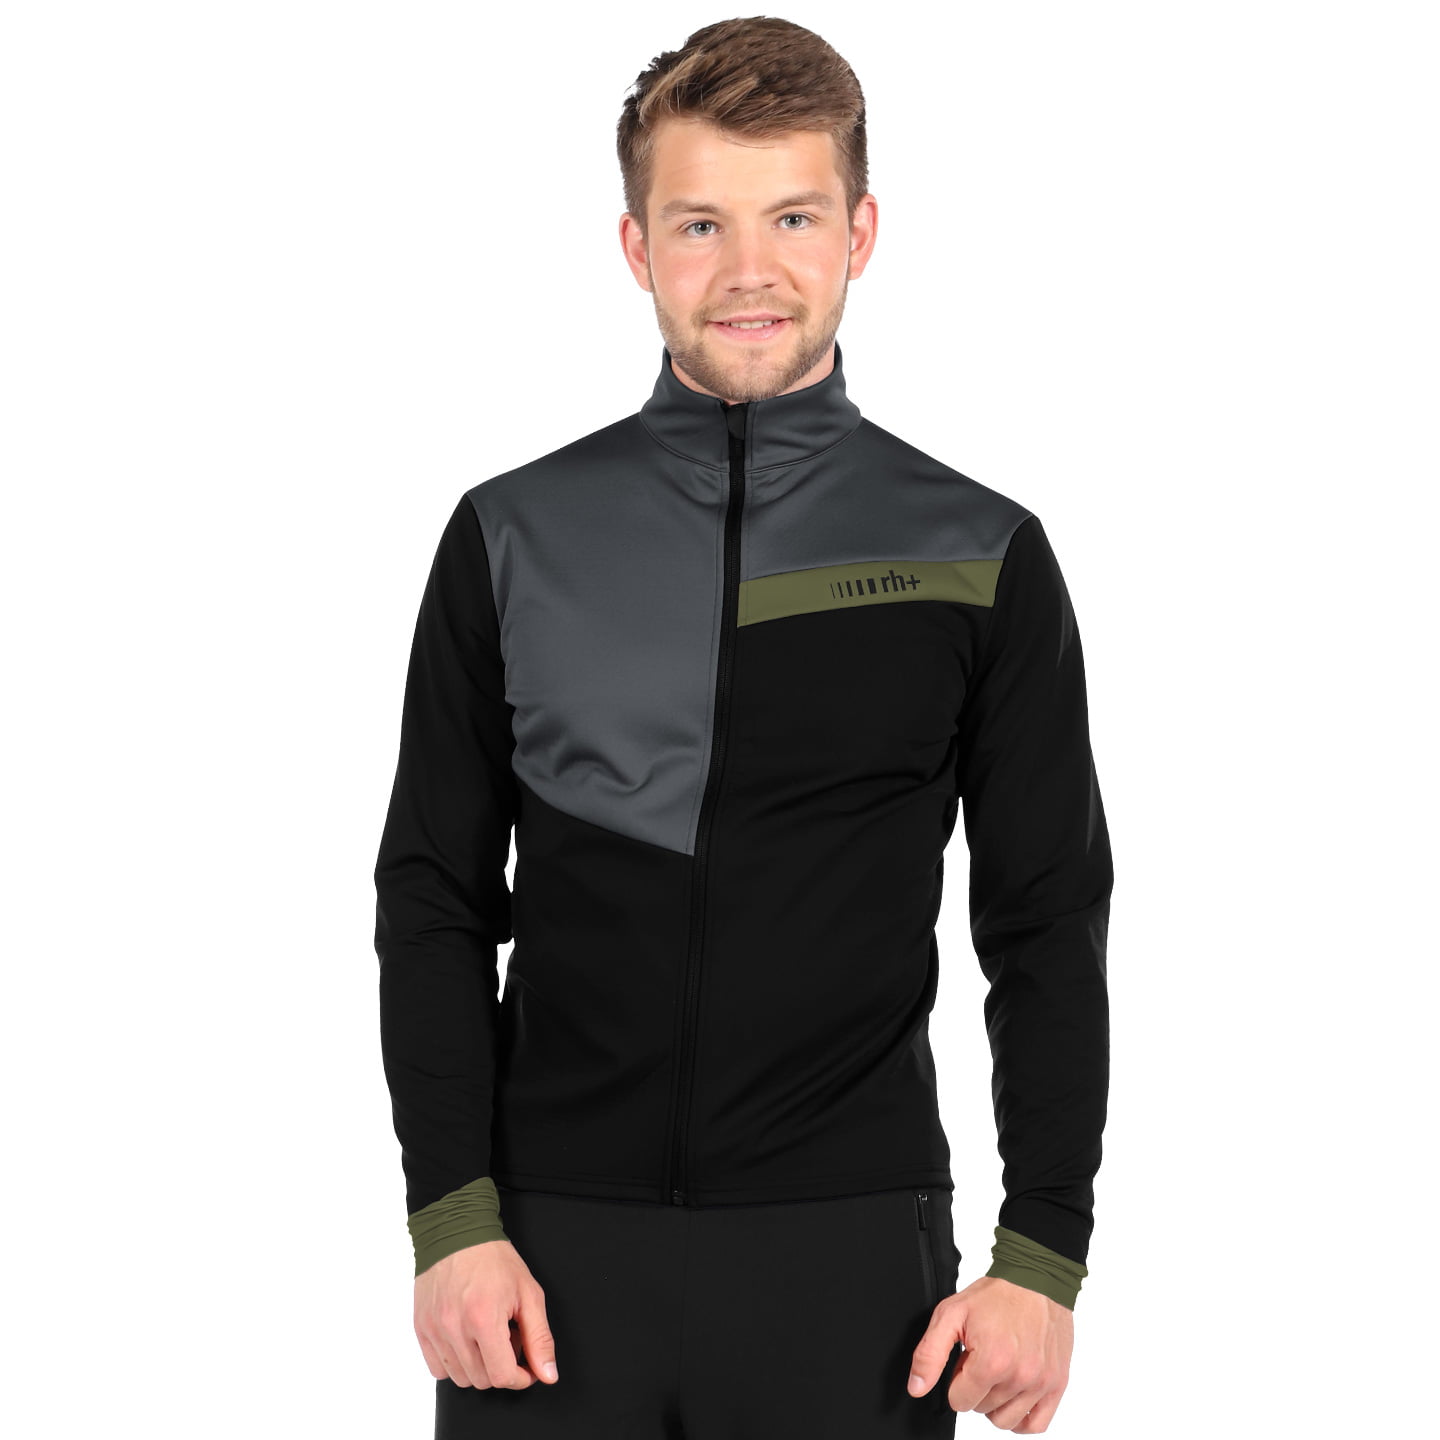 RH+ Klyma Winter Jacket, for men, size 2XL, Winter jacket, Cycling clothing